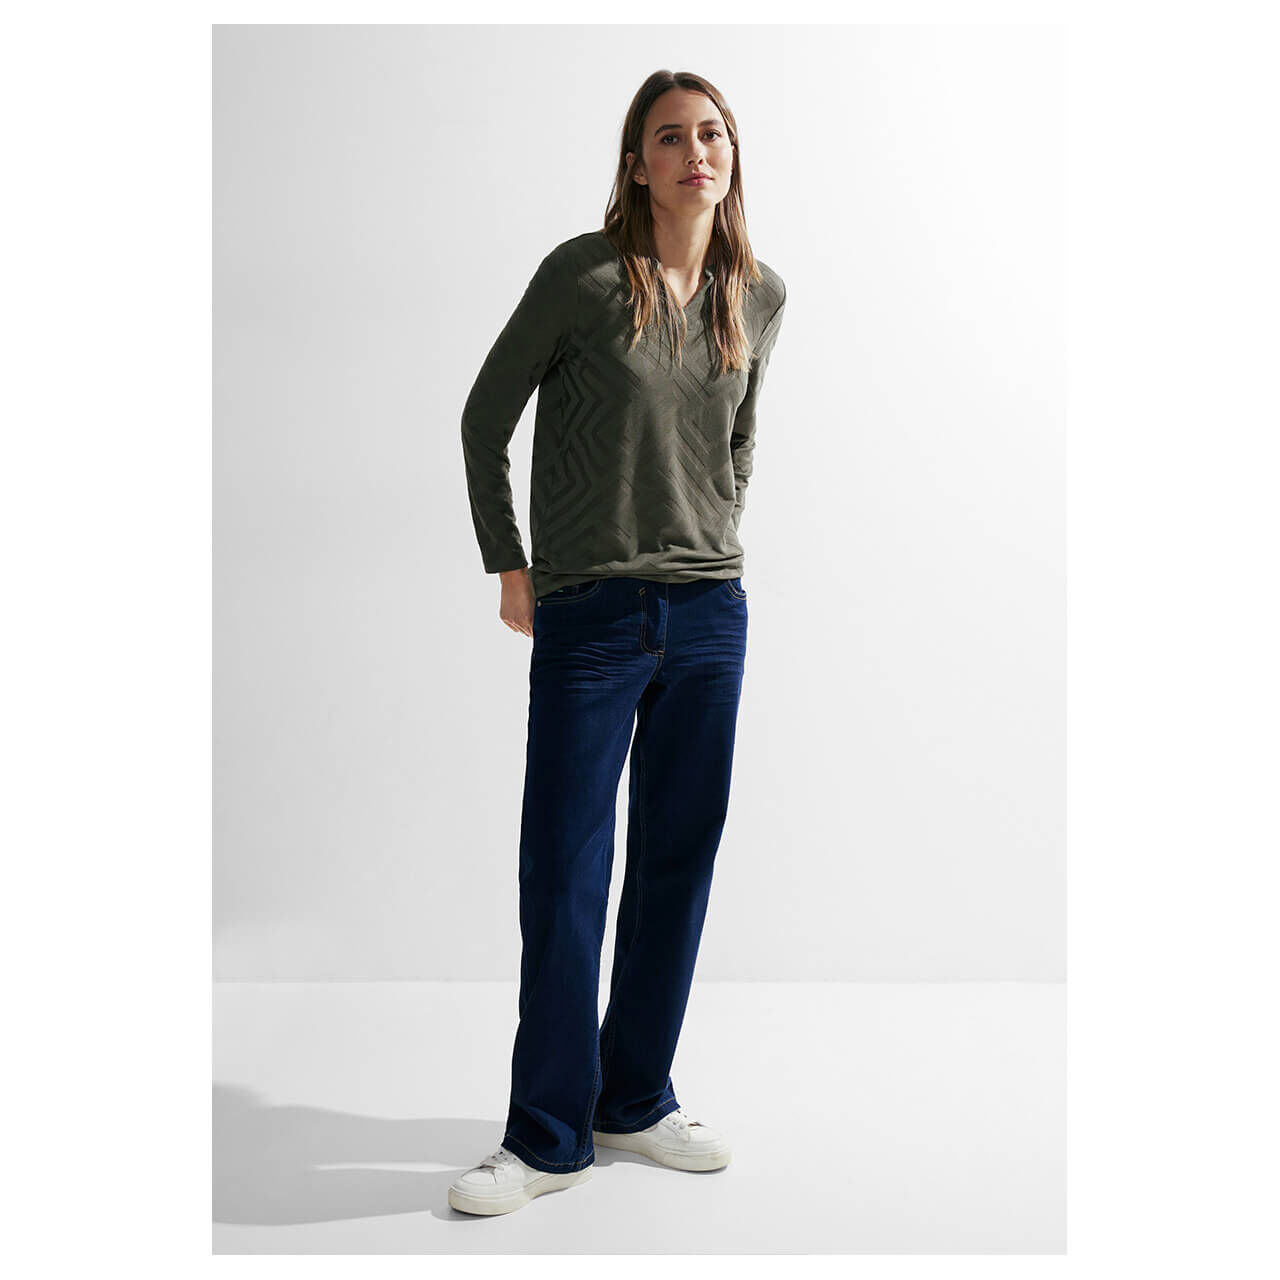 Cecil Damen Langarm Shirt Solid Jacquard Tunic dynamic khaki